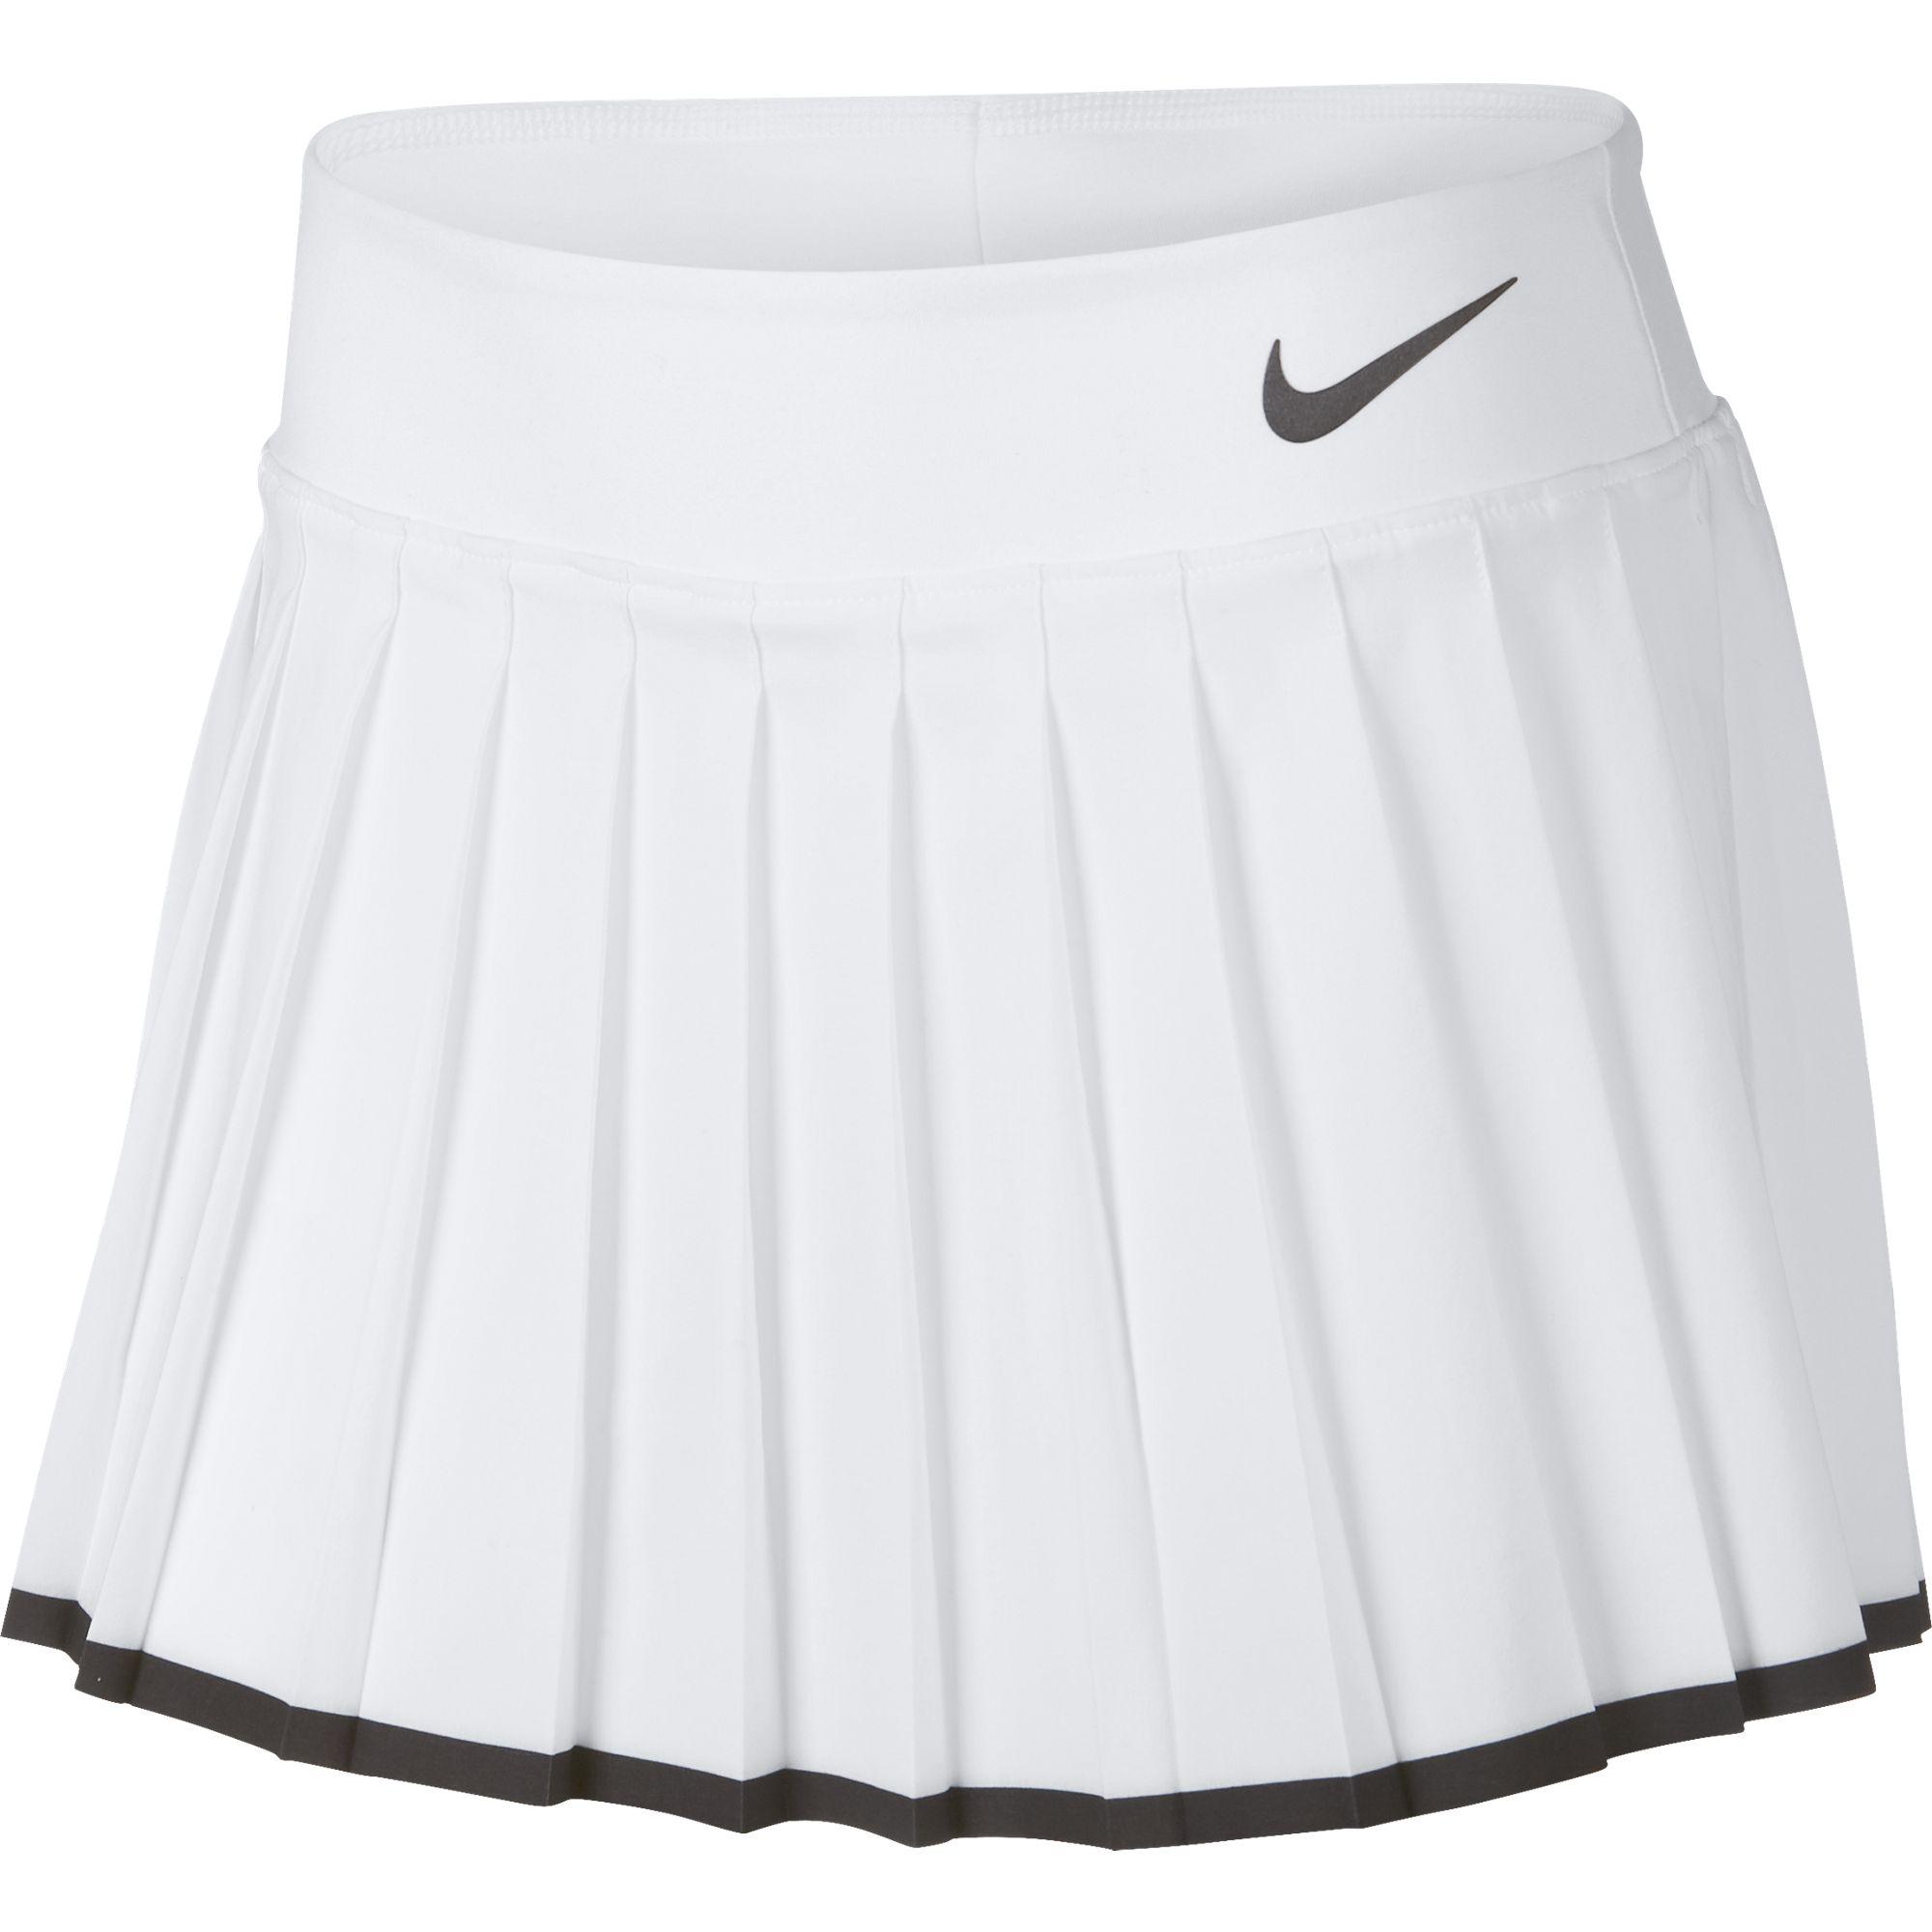 Nike Girls Victory Tennis Skirt - White/Black - Tennisnuts.com